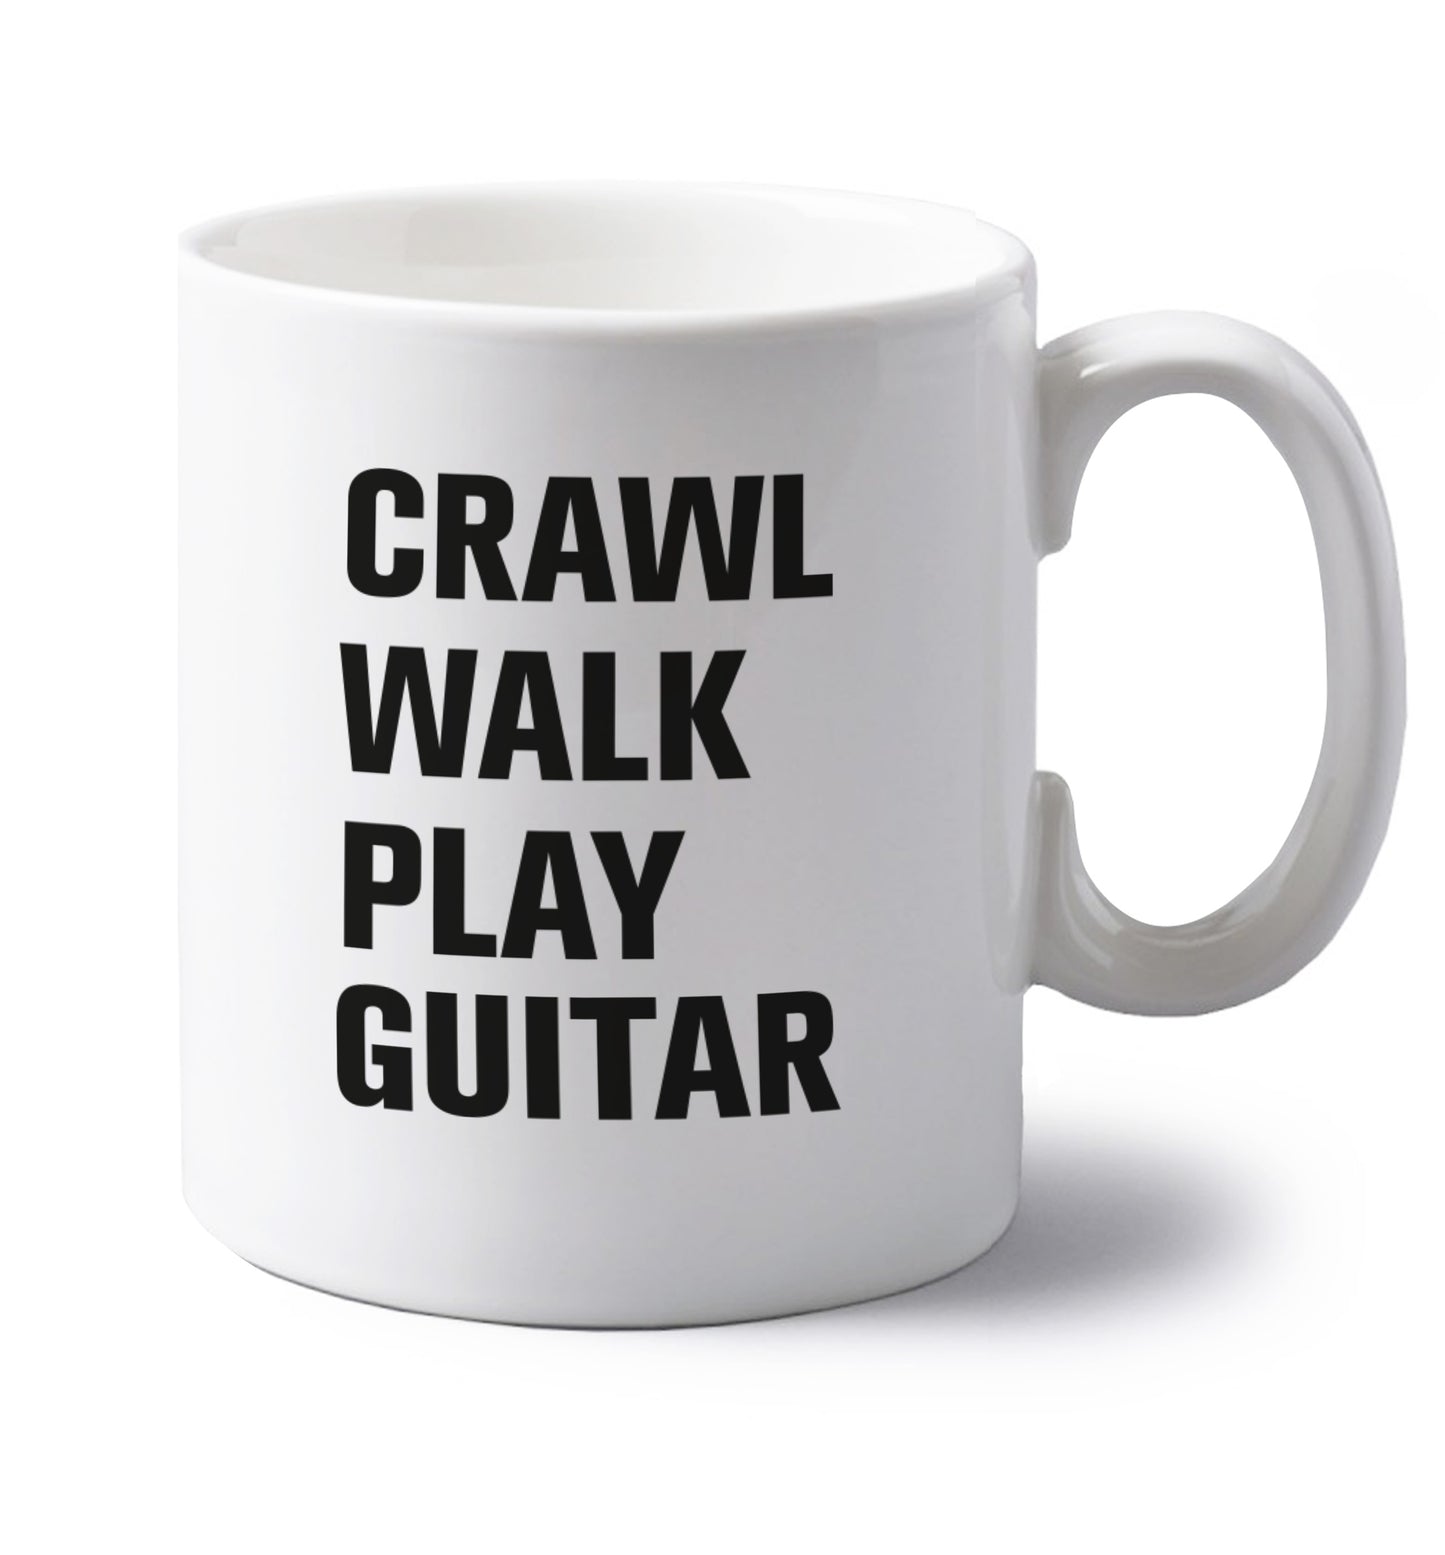 Crawl walk play guitar left handed white ceramic mug 